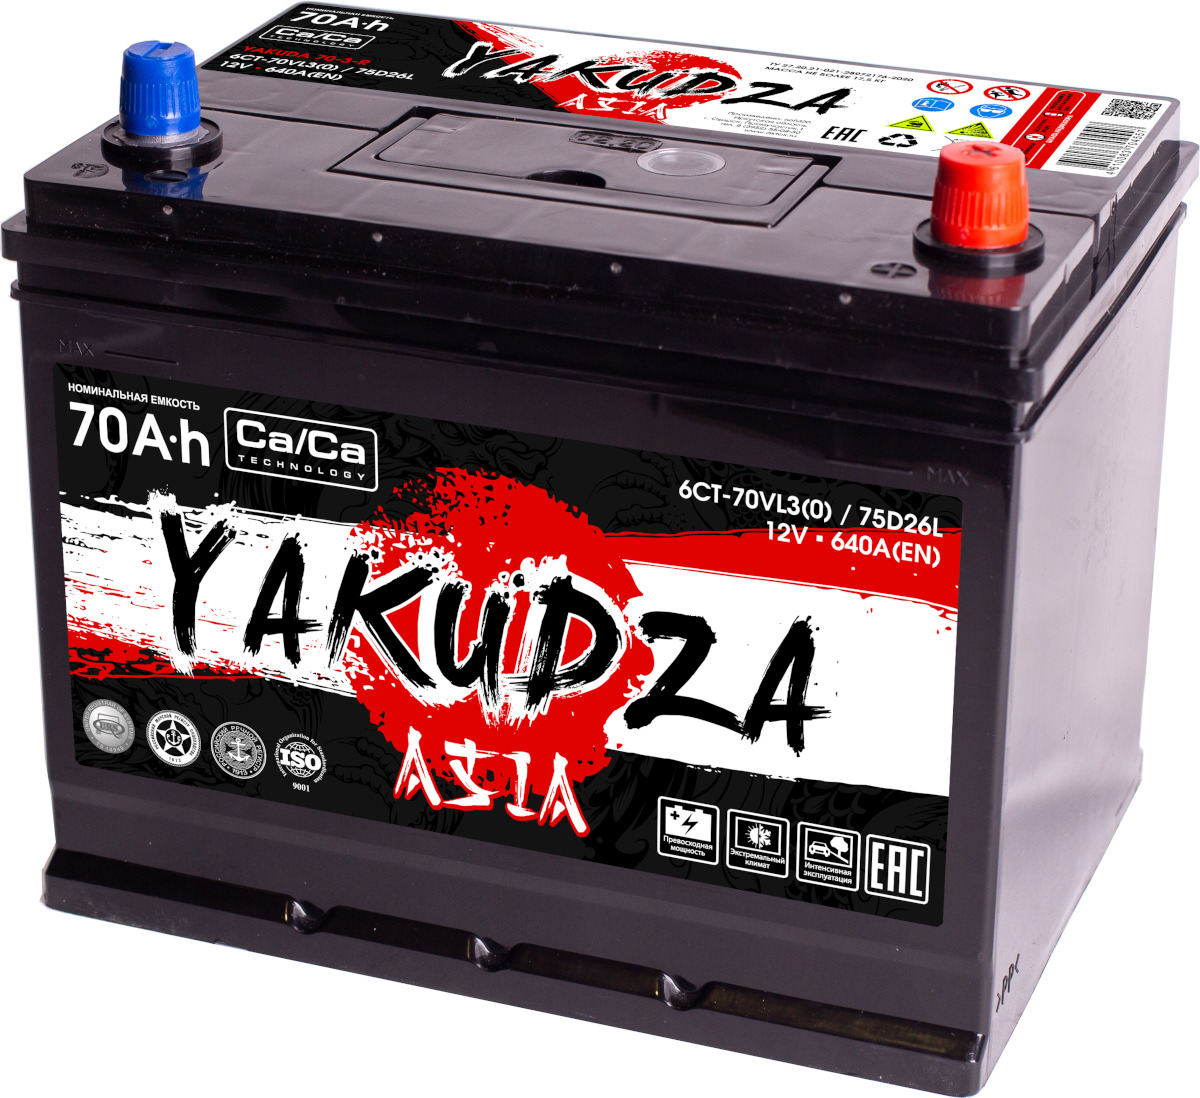 Автомобильный аккумулятор YAKUDZA ASIA 75D26L 70Ah